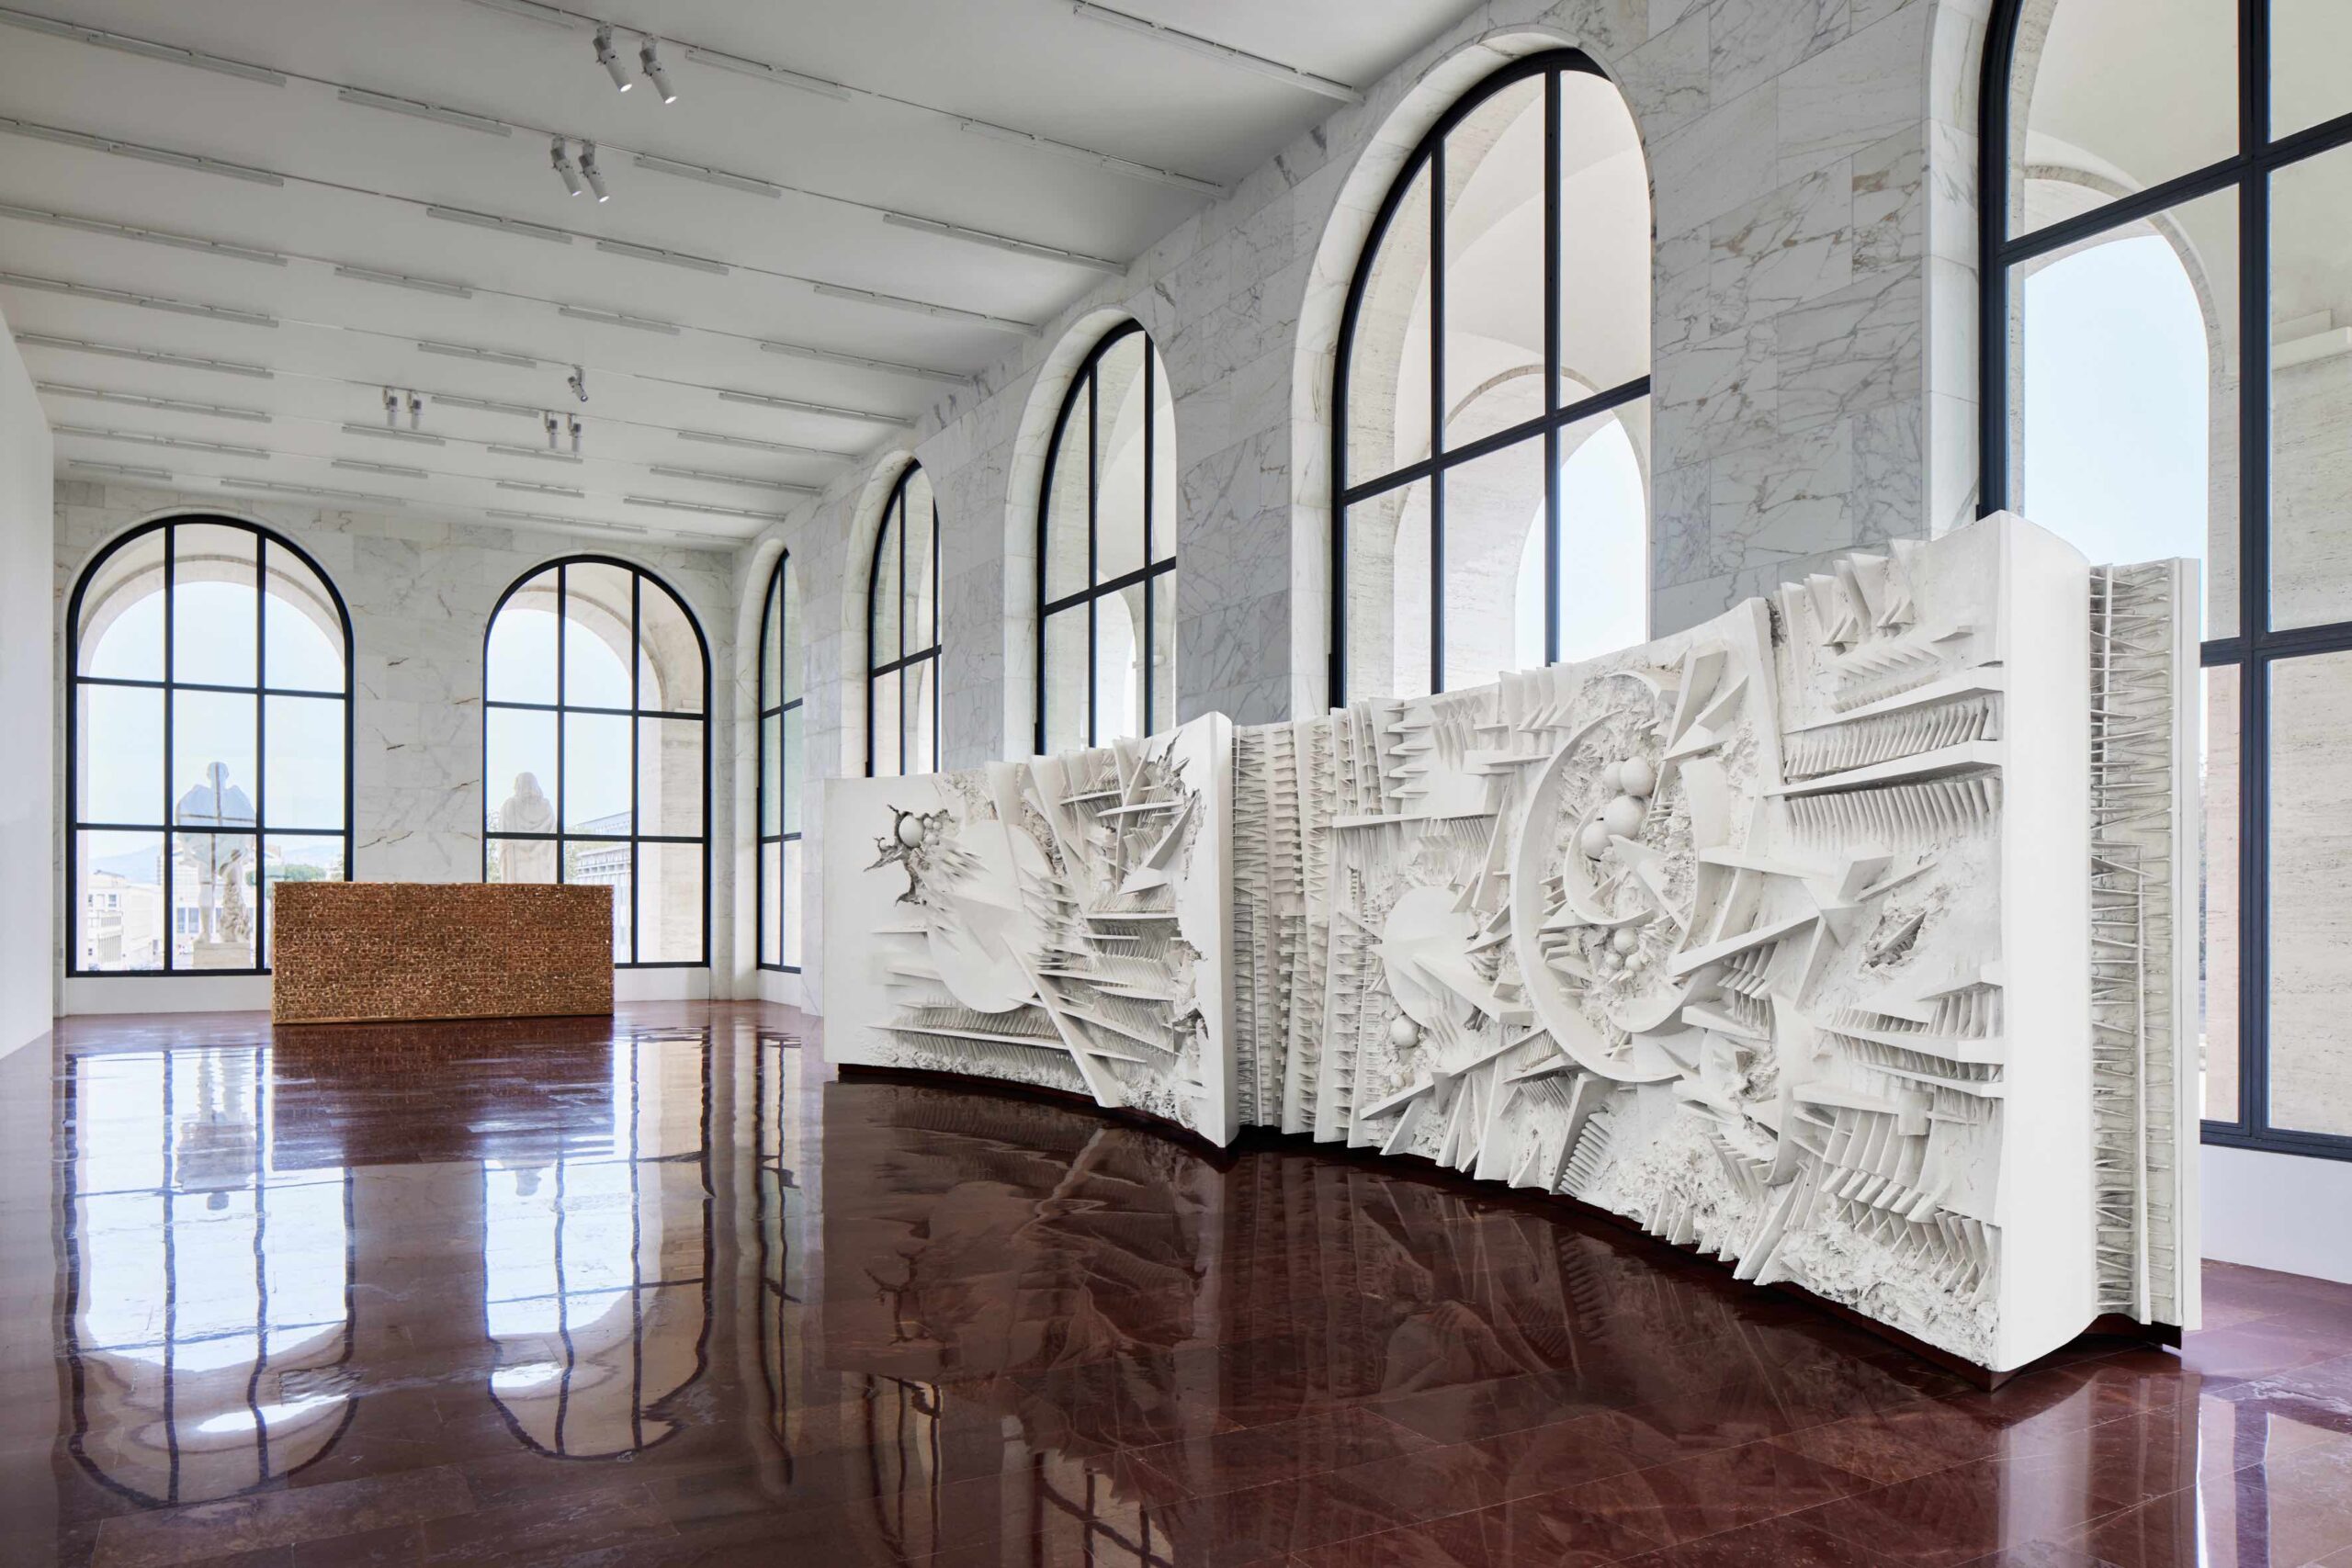 Fendi Collaborates with Italian Sculptor Arnaldo Pomodoro for an